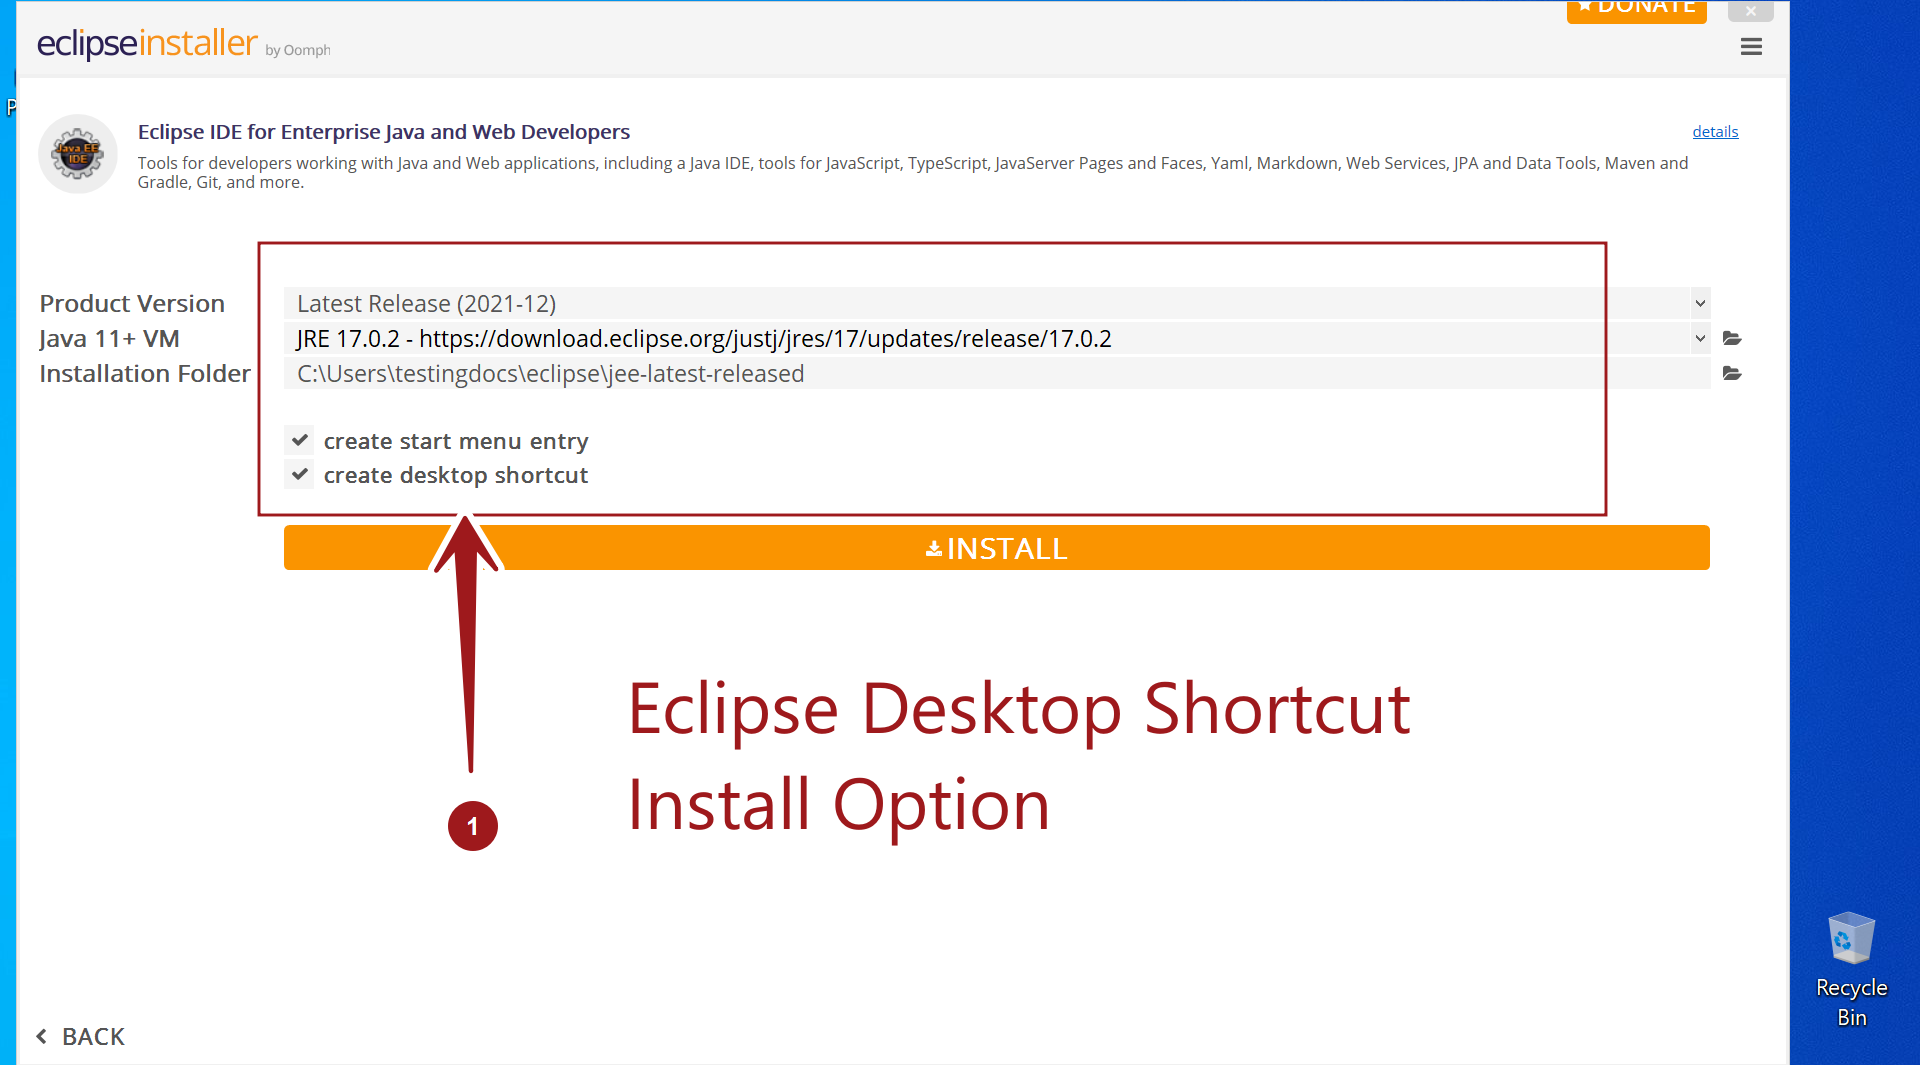 Eclipse Desktop Shortcut Install Option